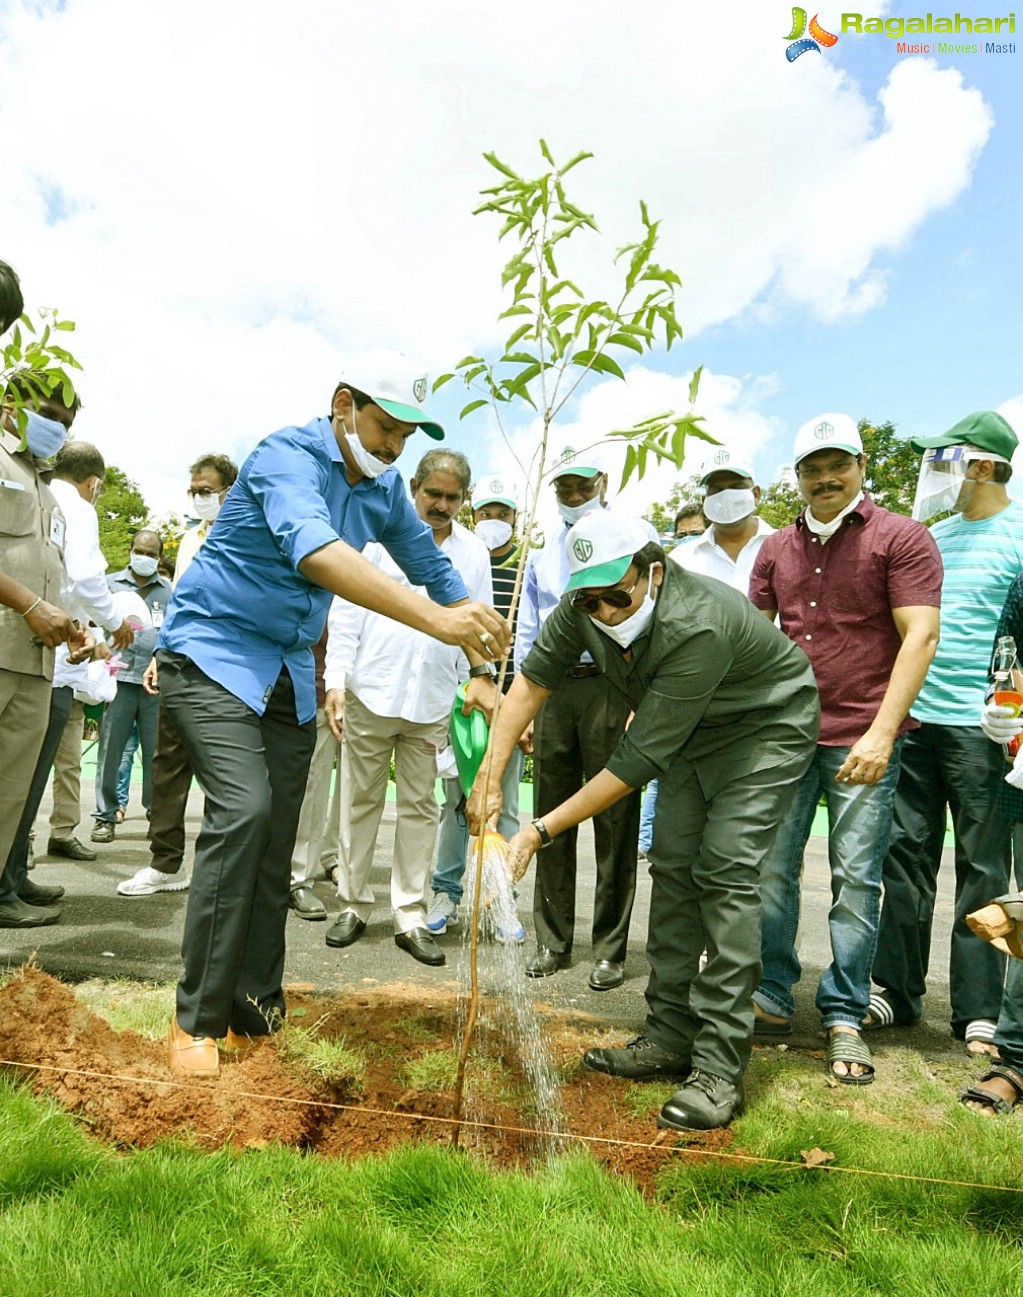 Chiranjeevi, Pawan Kalyan Promote 1 Lakh Tree Plantation Mission